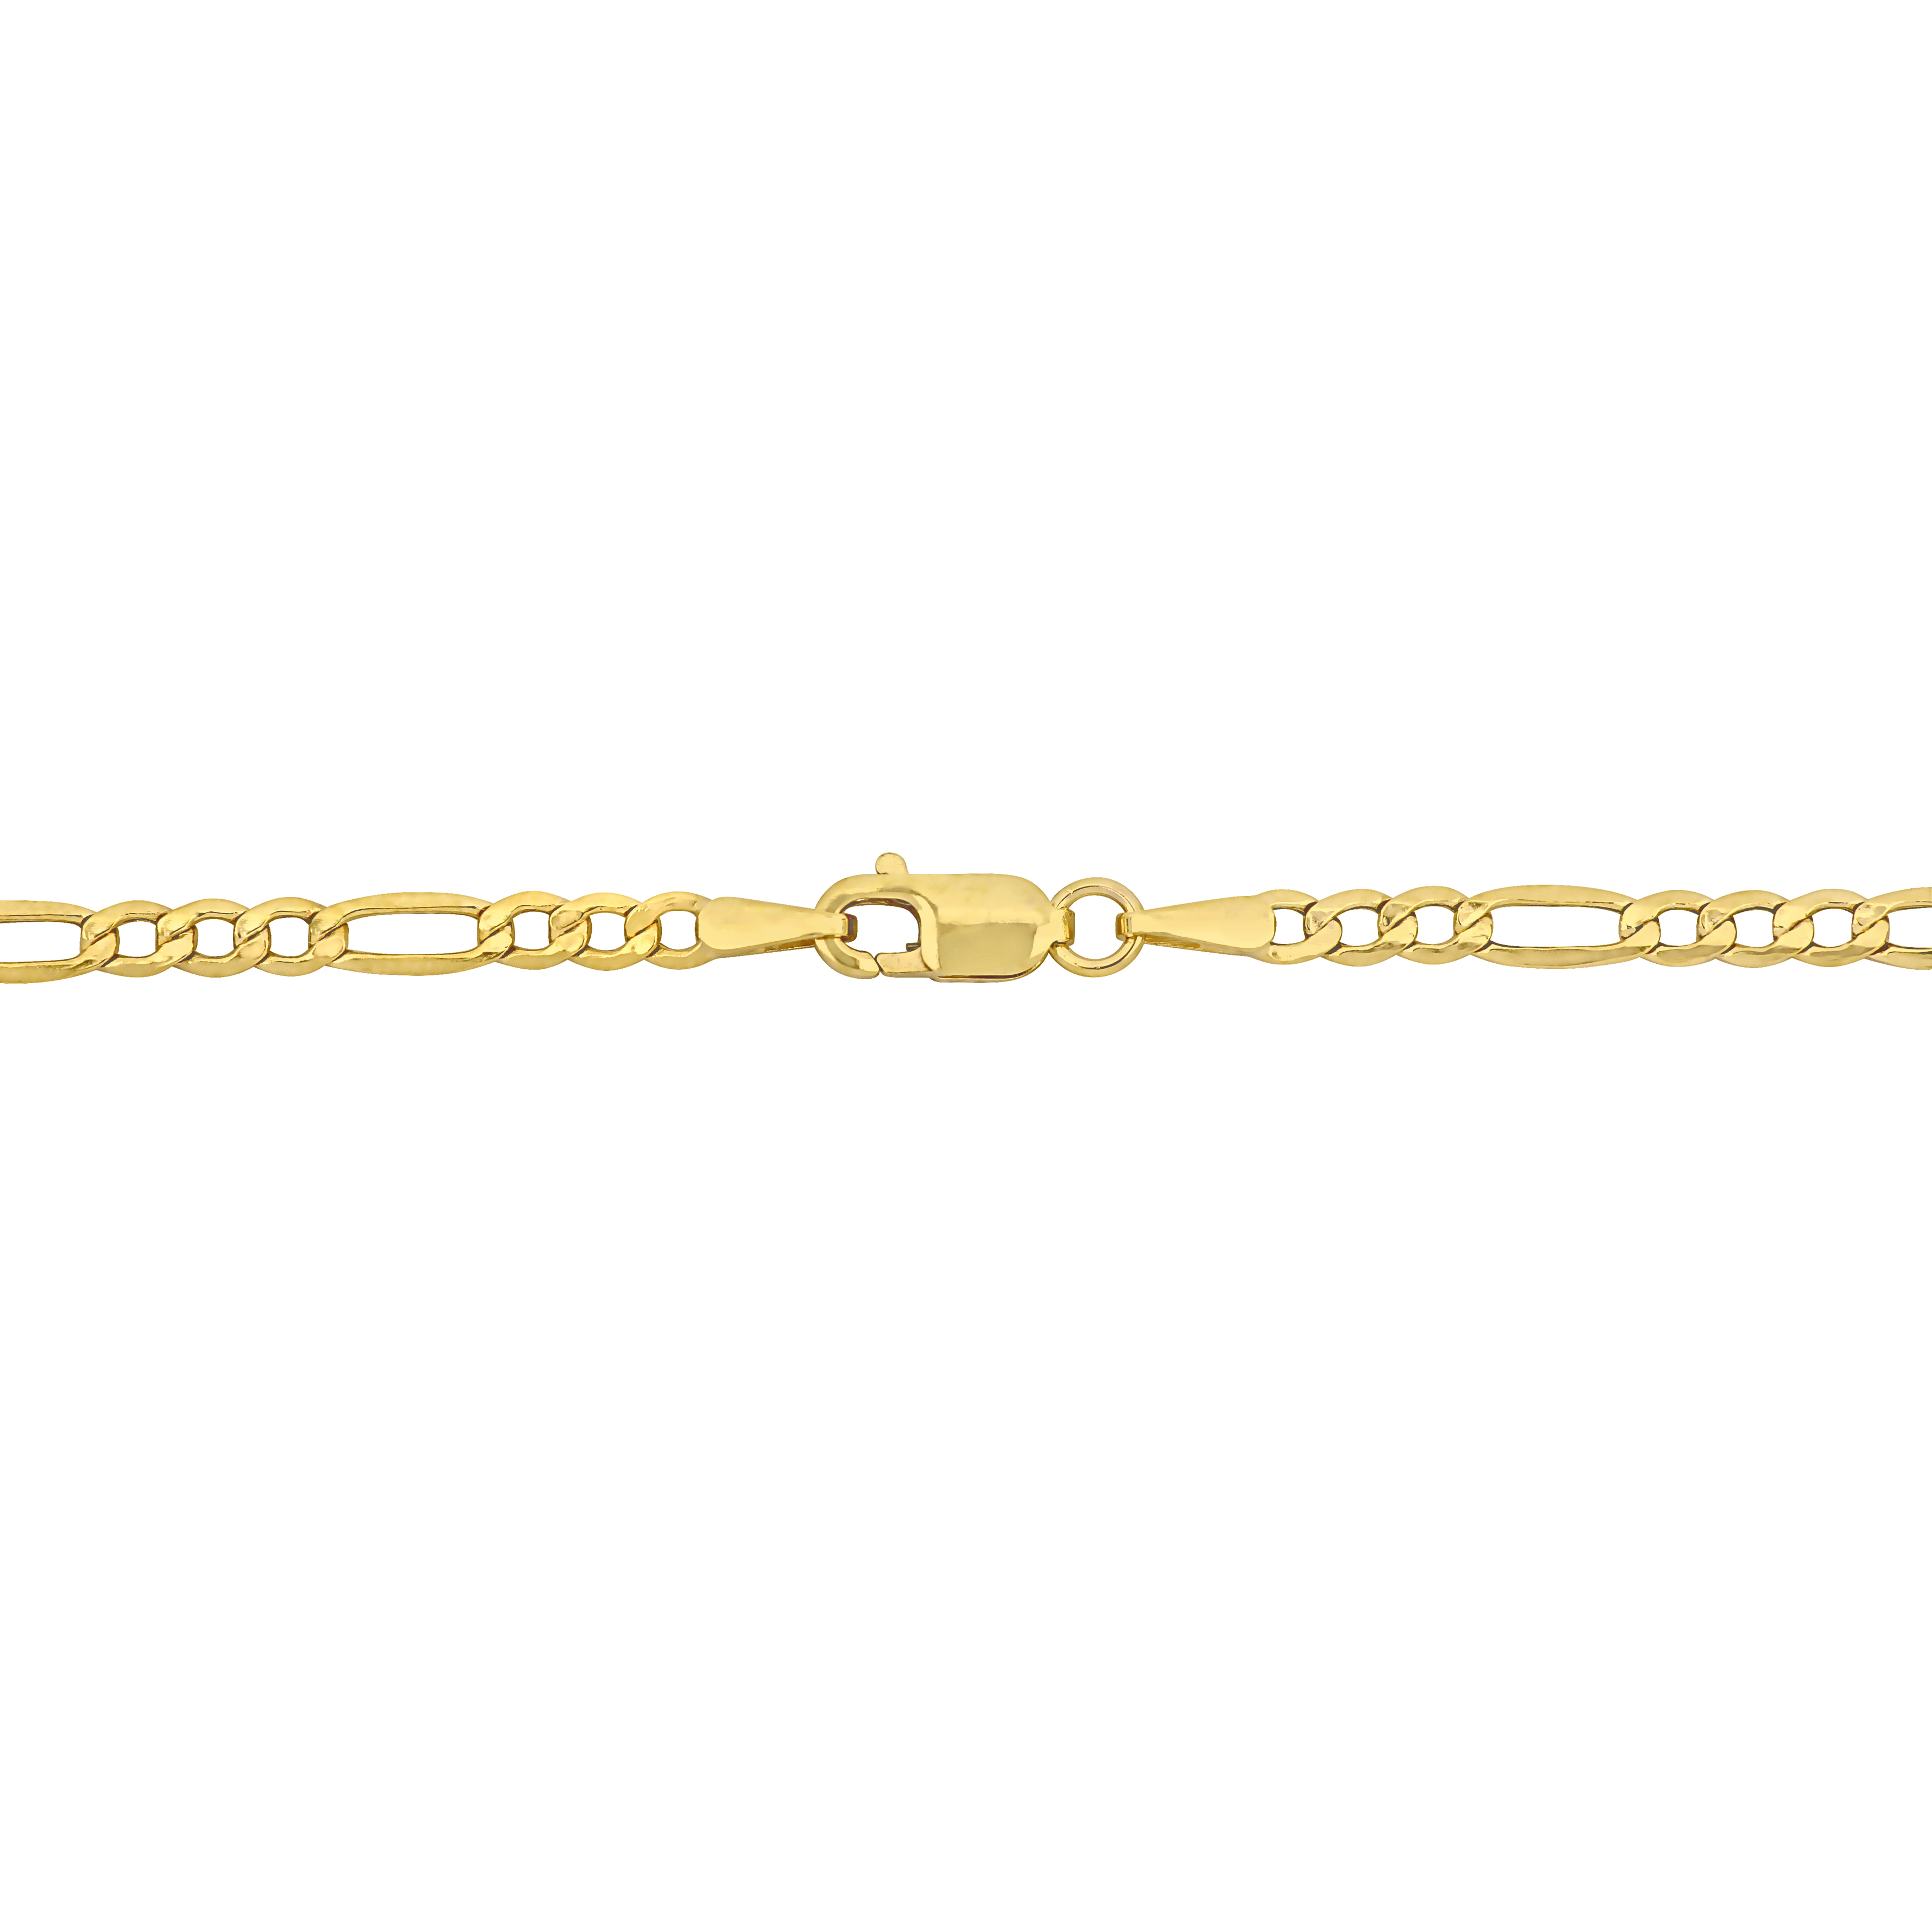 2.5mm Figaro Bracelet in 10k Yellow Gold - 9 in.